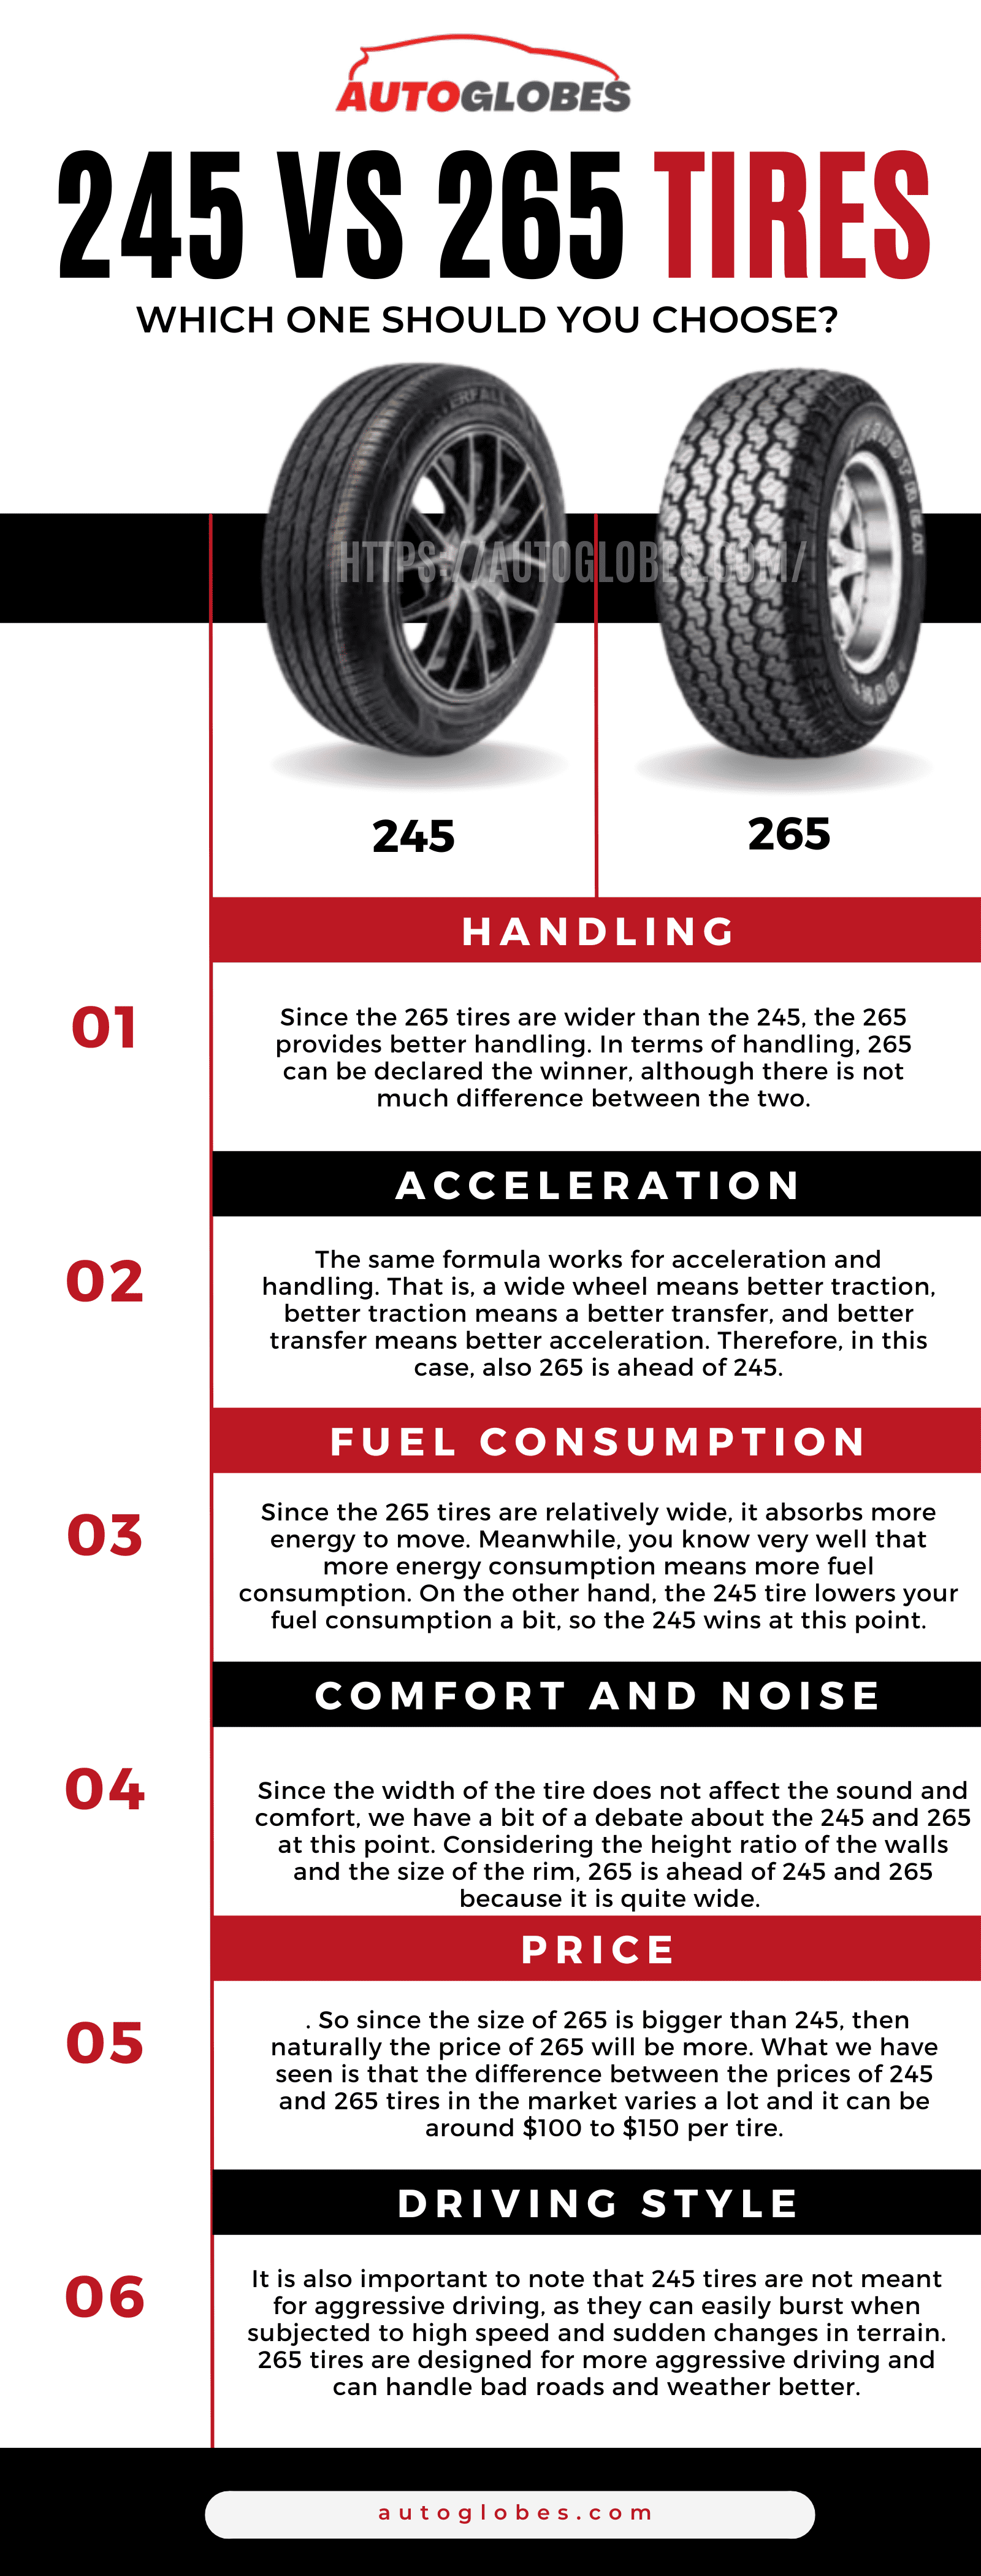 245 Vs 265 Tires infographic